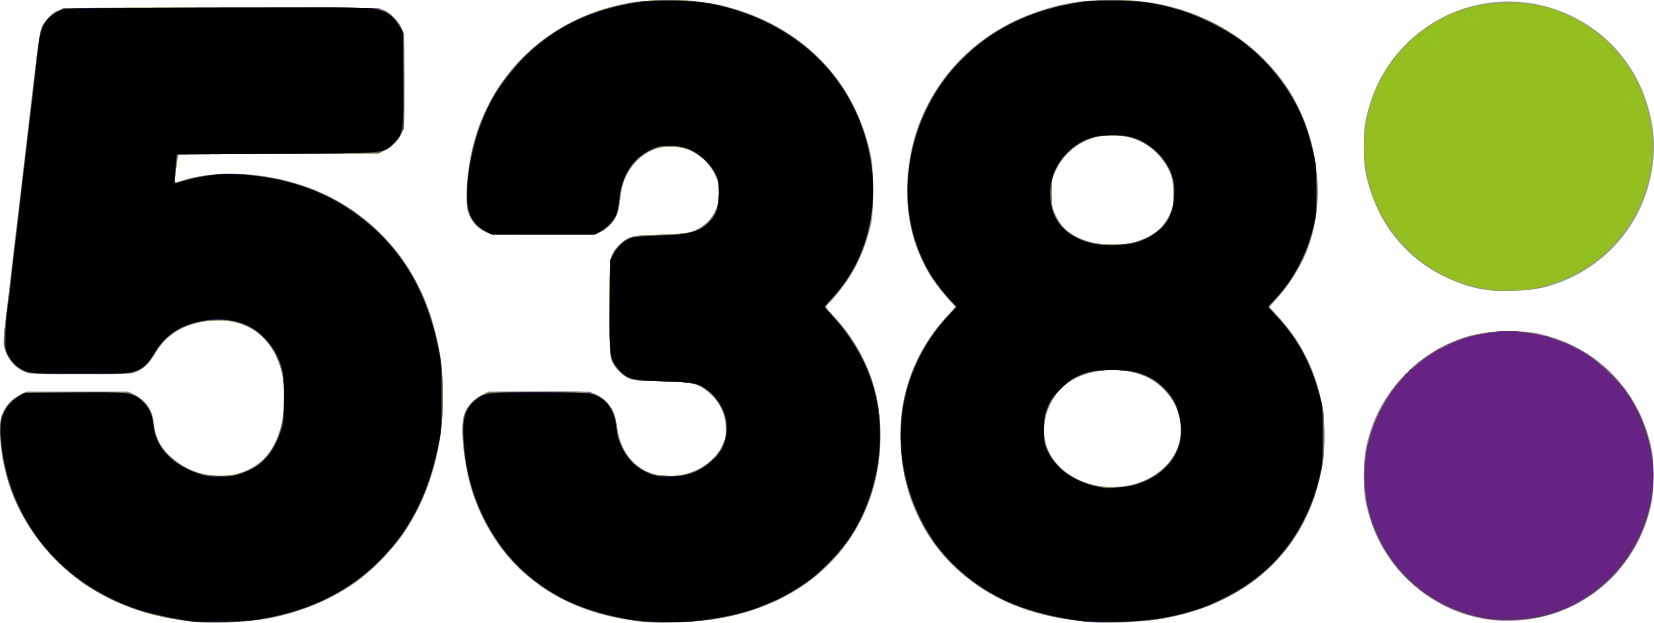 538_logo